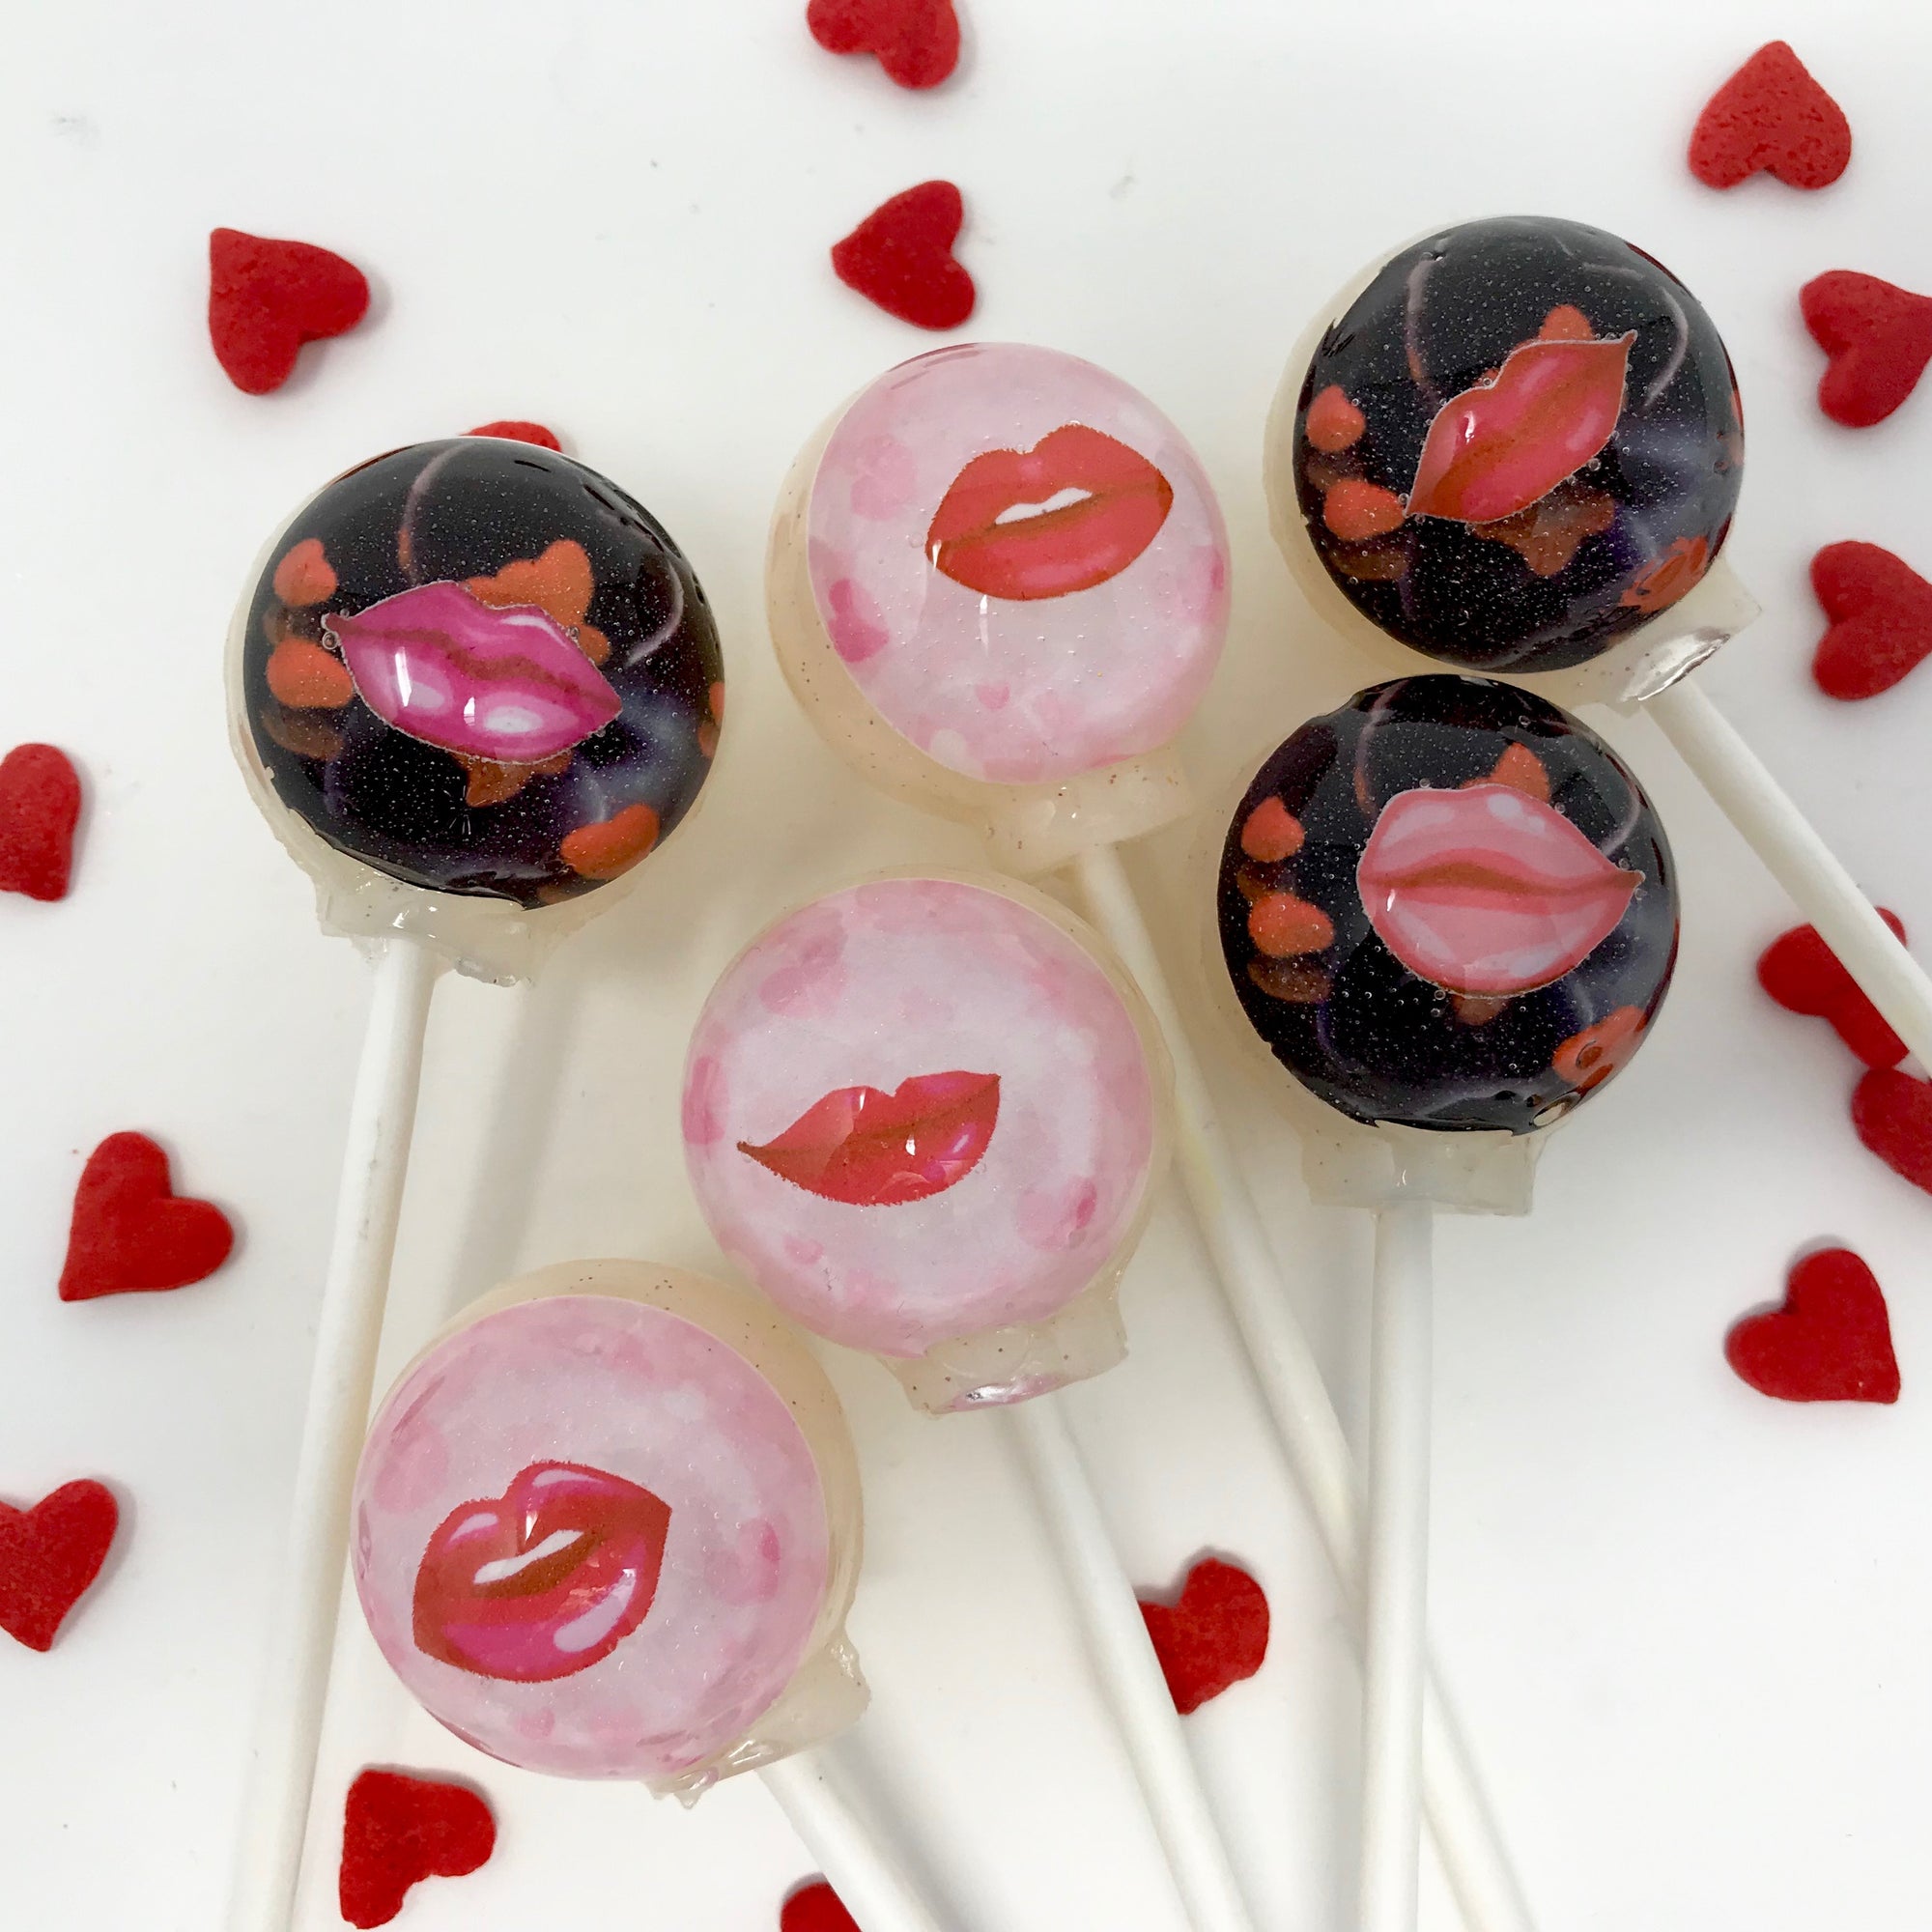 Kiss 3-D Lollipops 6-piece set by I Want Candy!